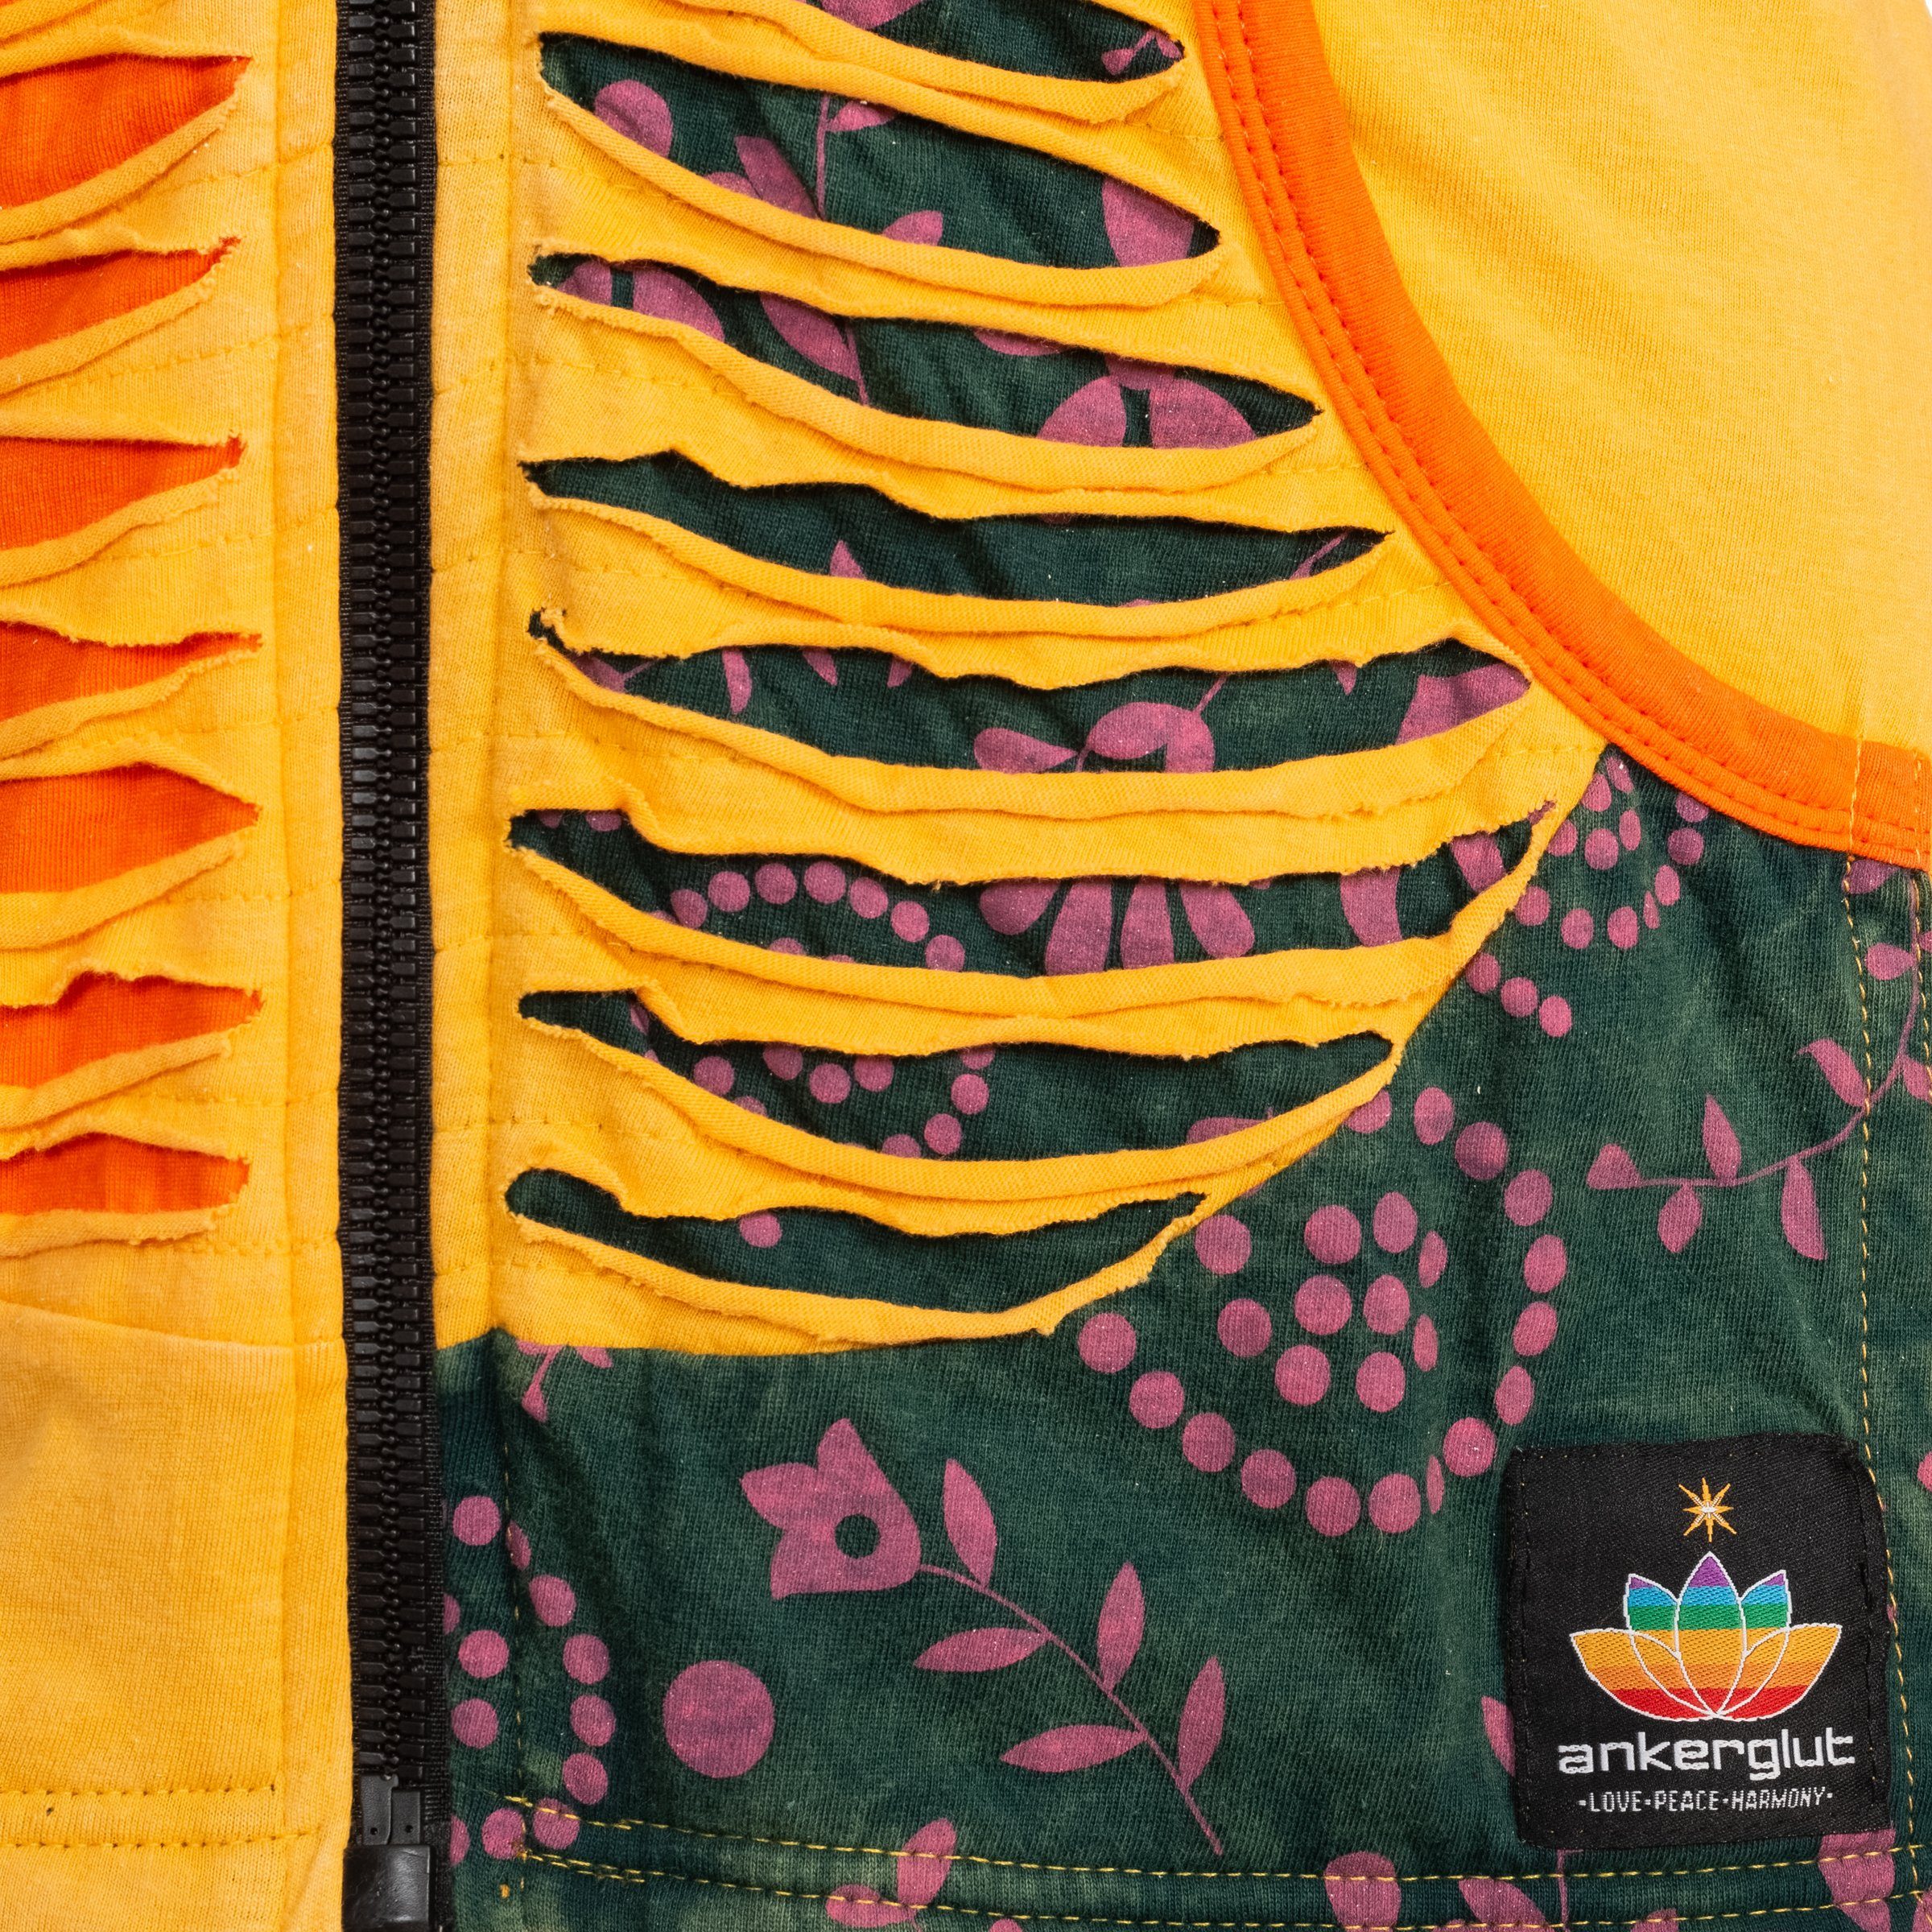 ankerglut Kapuzenfleecejacke Multicolor ANKERGLUT WOMEN POWER FLOWER sun erhältlich Auch großen Größen CS in #nepalliebe samoa